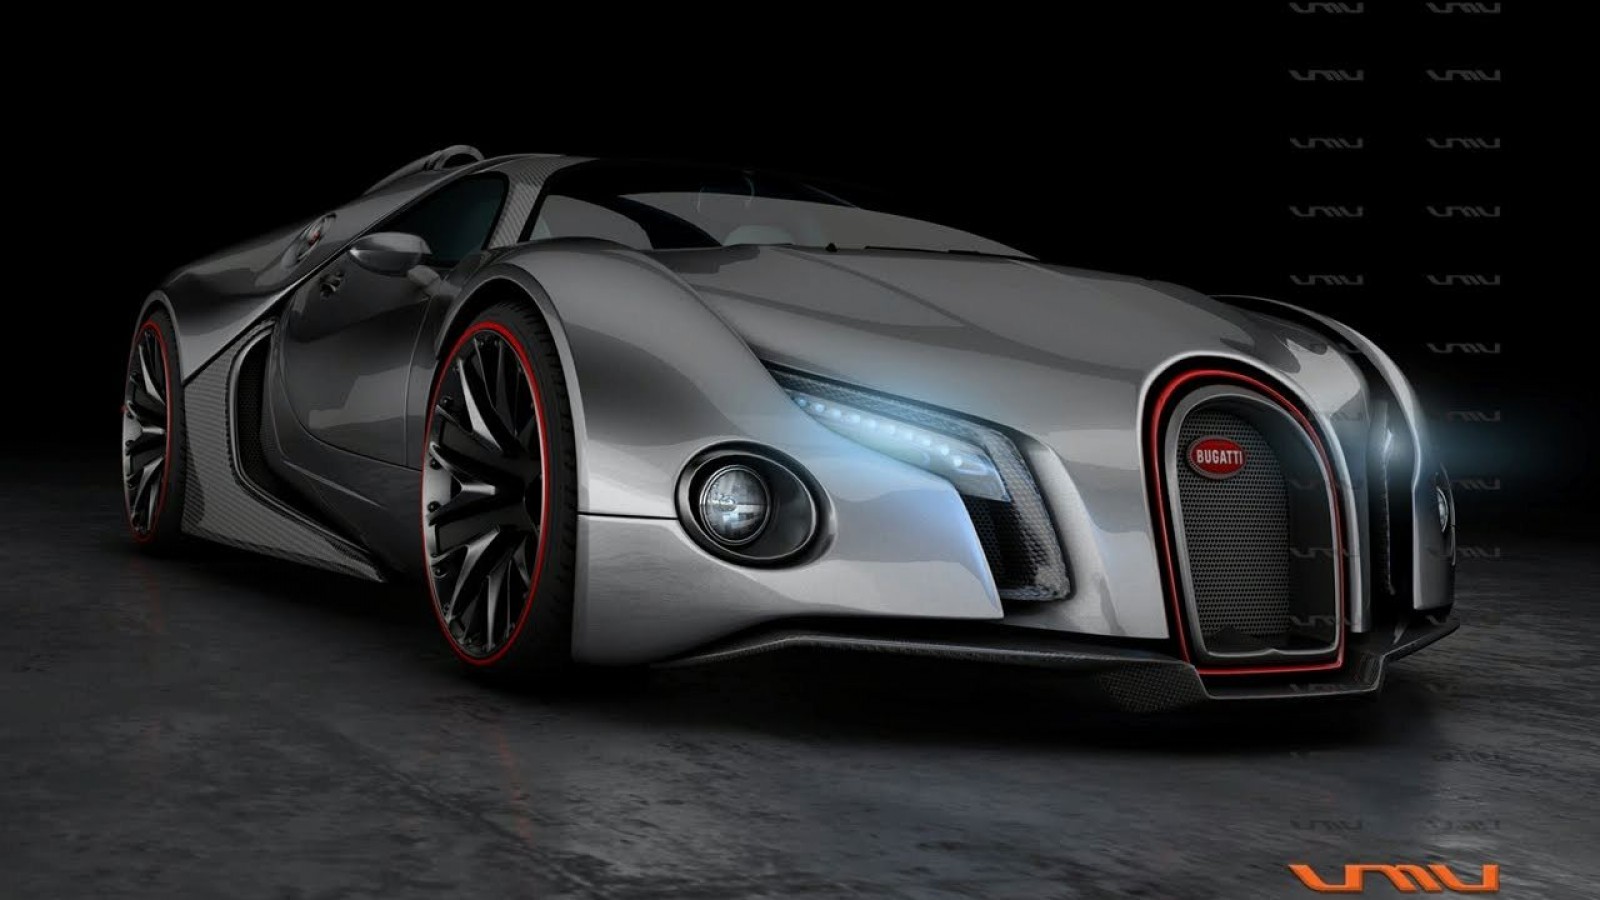 Bugatti Car Images Free Download